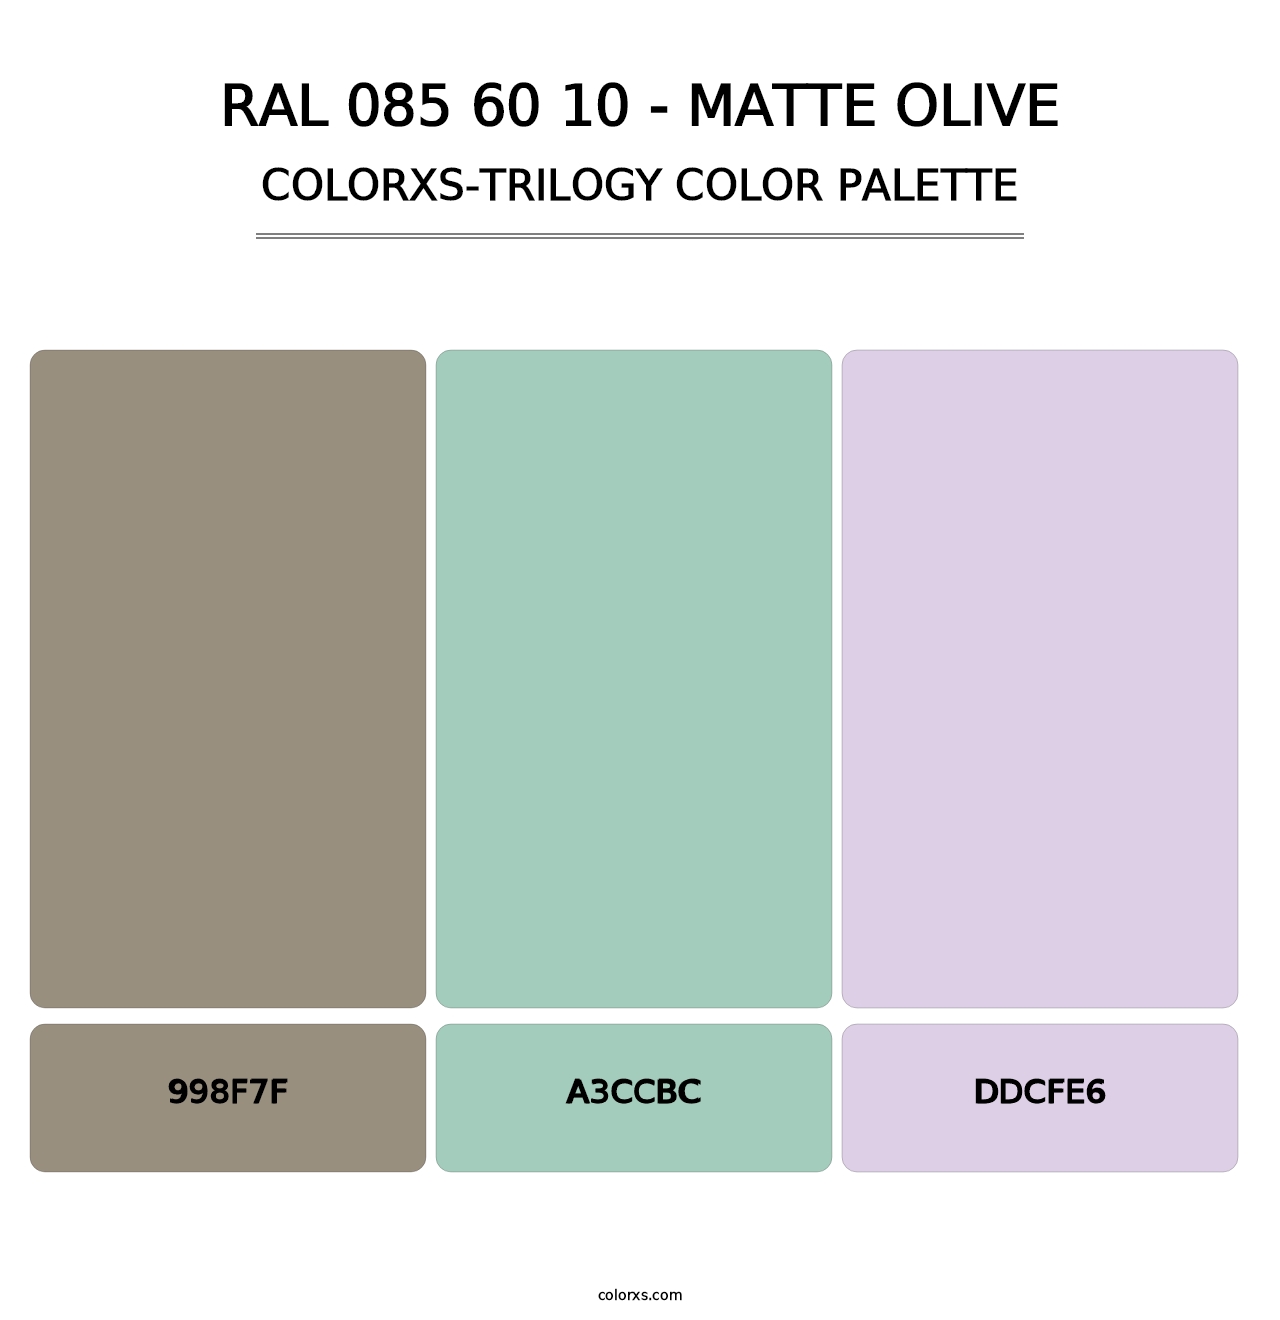 RAL 085 60 10 - Matte Olive - Colorxs Trilogy Palette